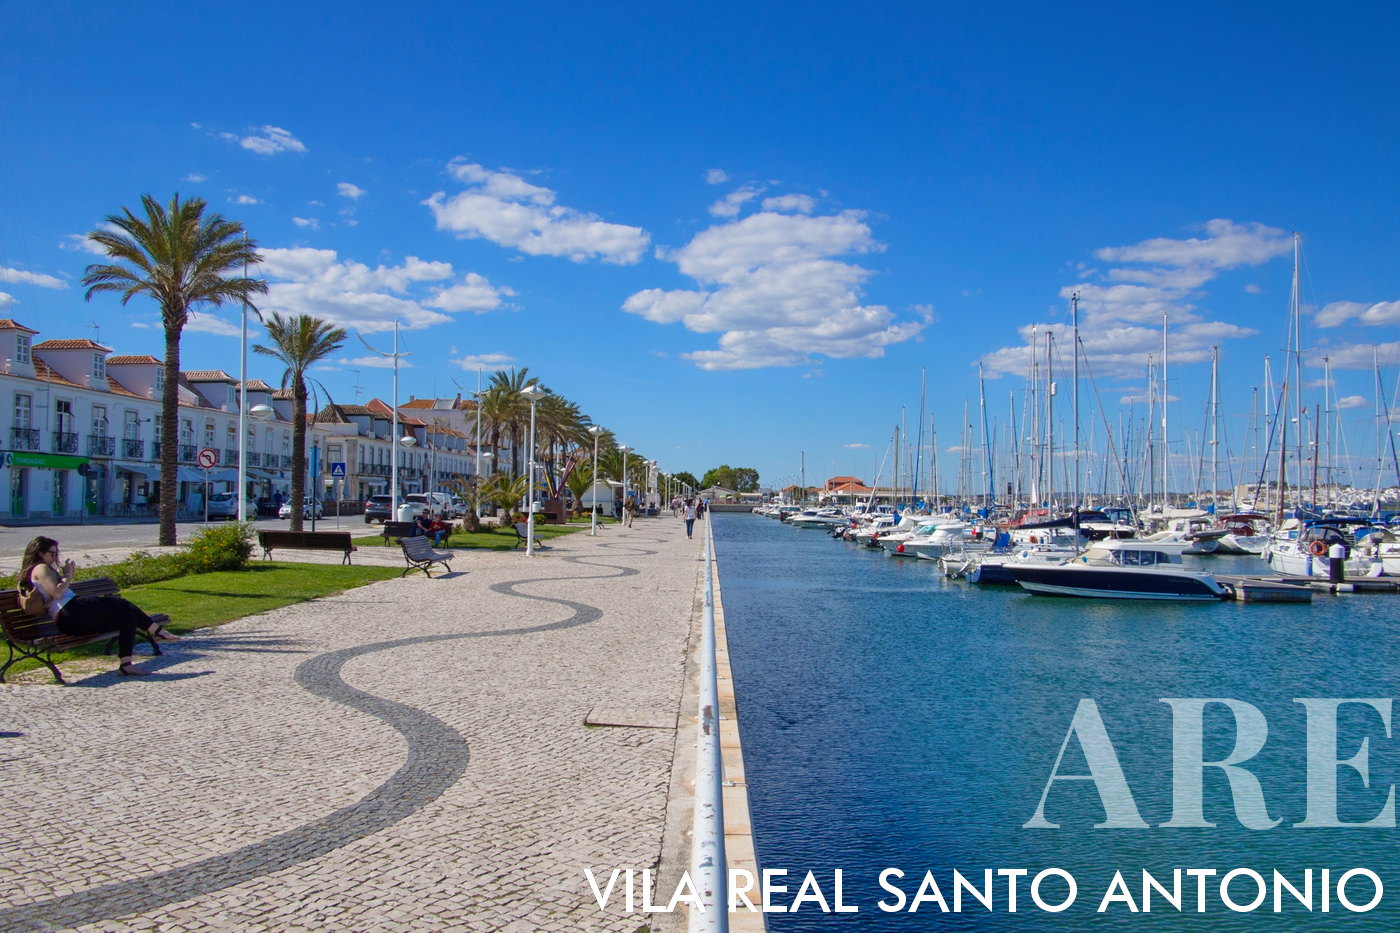 Vila Real de Santo António's Riverside Promenade